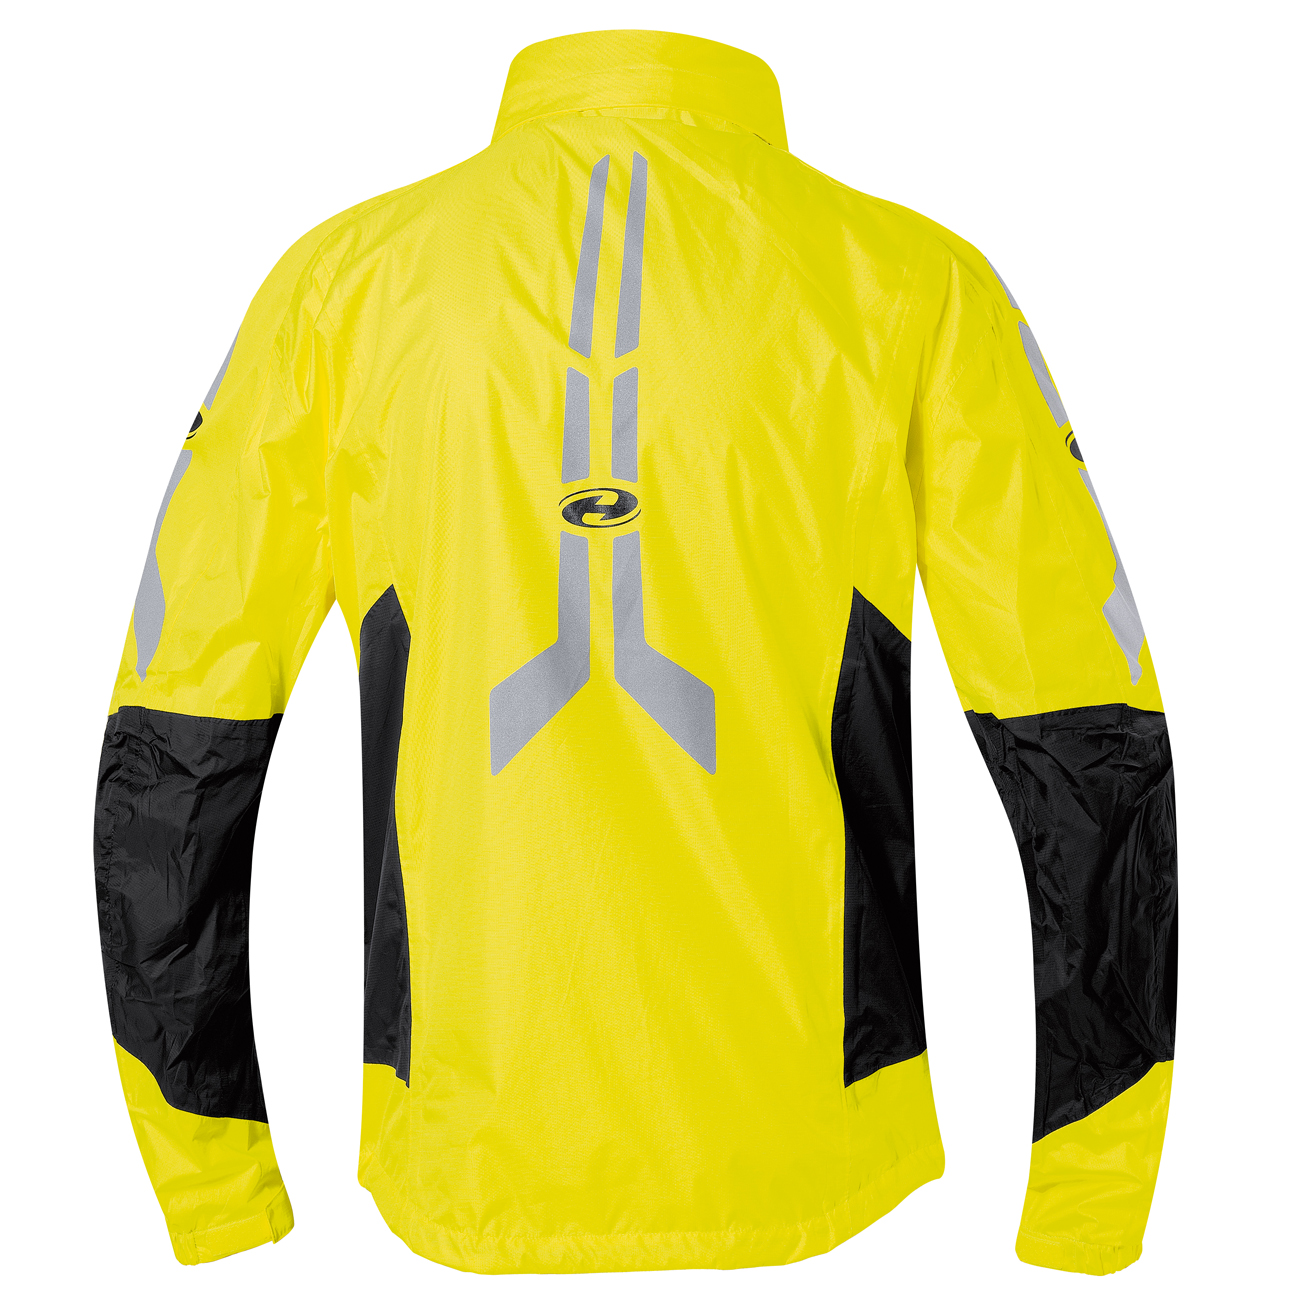 Wet Tour Jacket Rain jacket